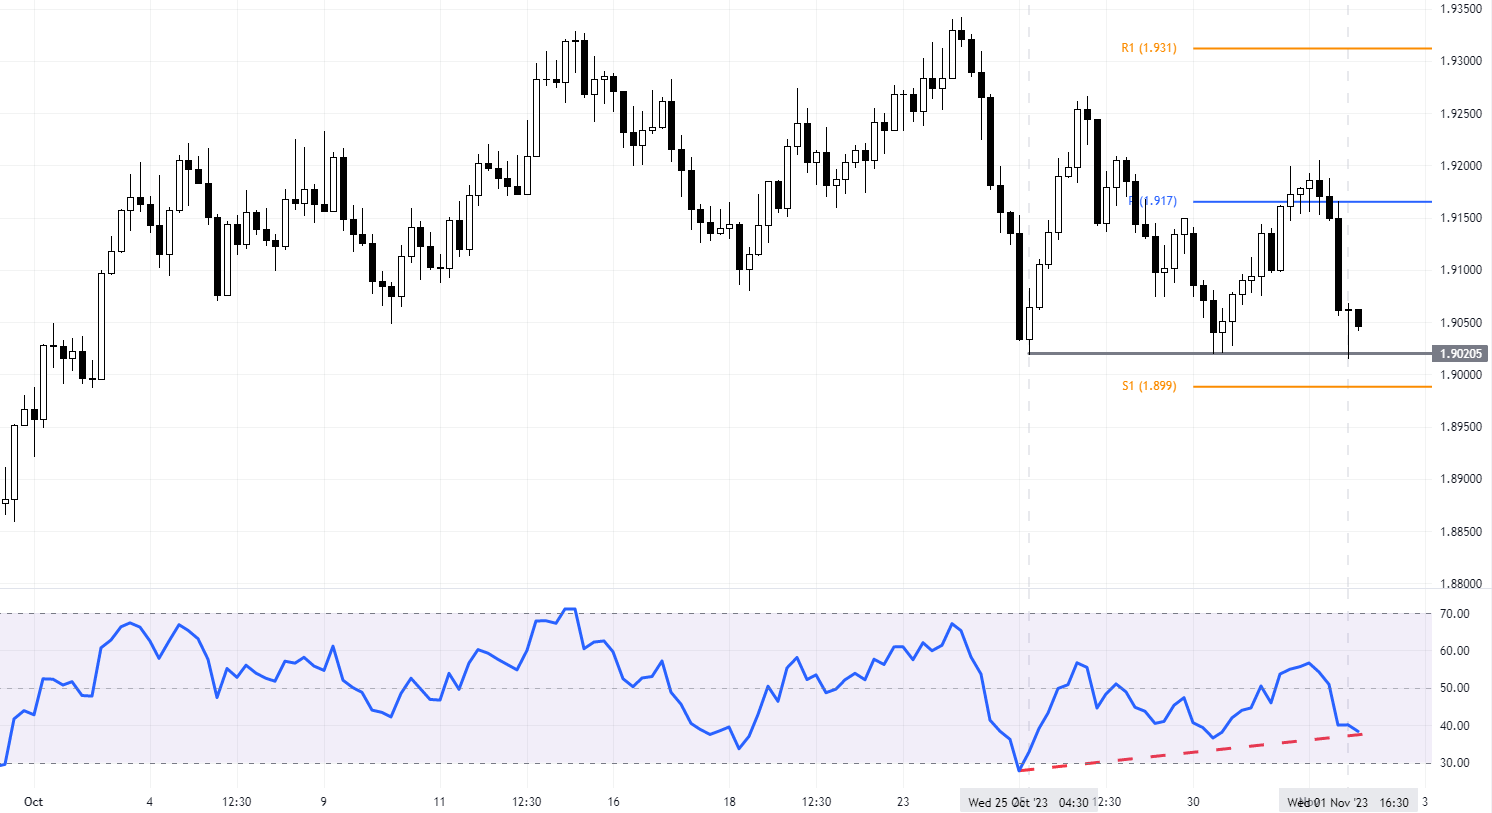 GBPAUD Forecast - Australian Commodity Price Drop